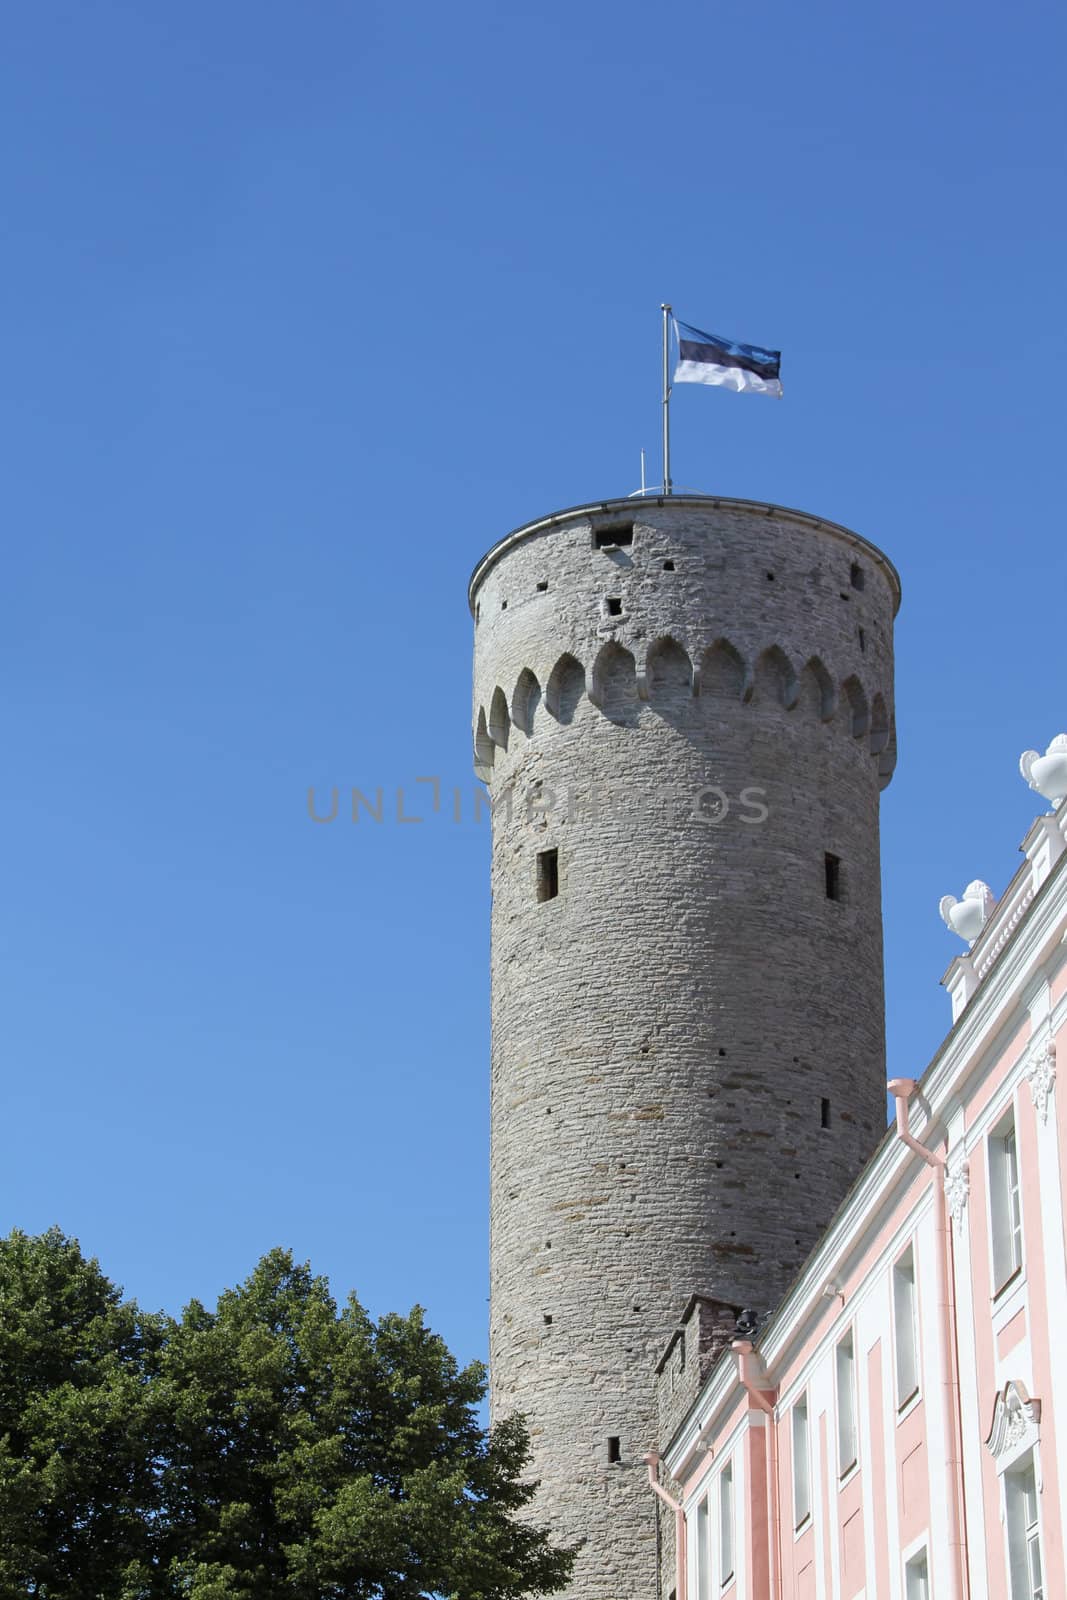 Pikk Hermann tower in Tallinn by destillat